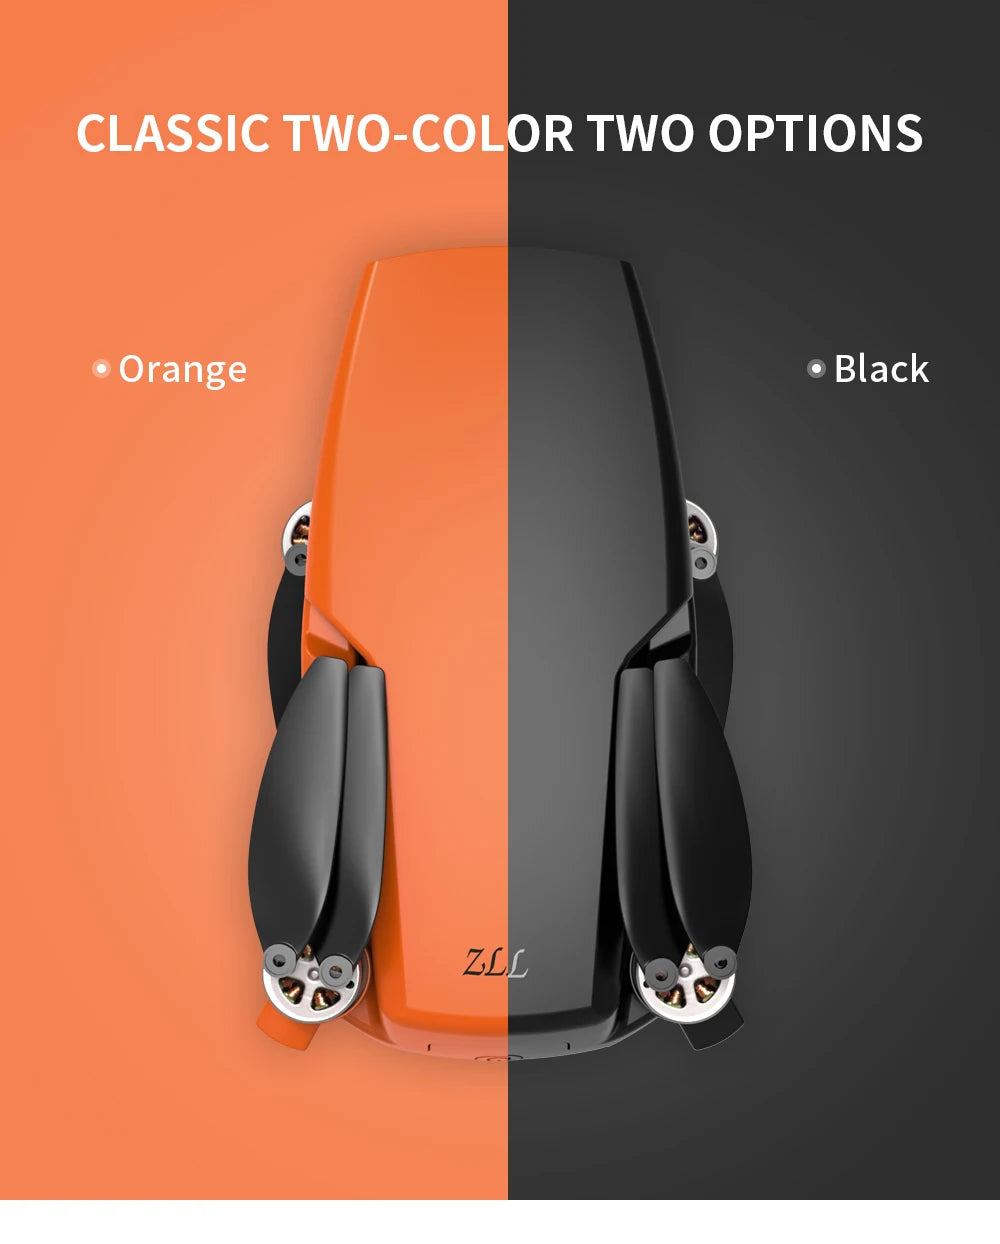 G108 Pro MAx Drone, CLASSIC TWO-COLOR TWO OPTIONS Orange Black Z